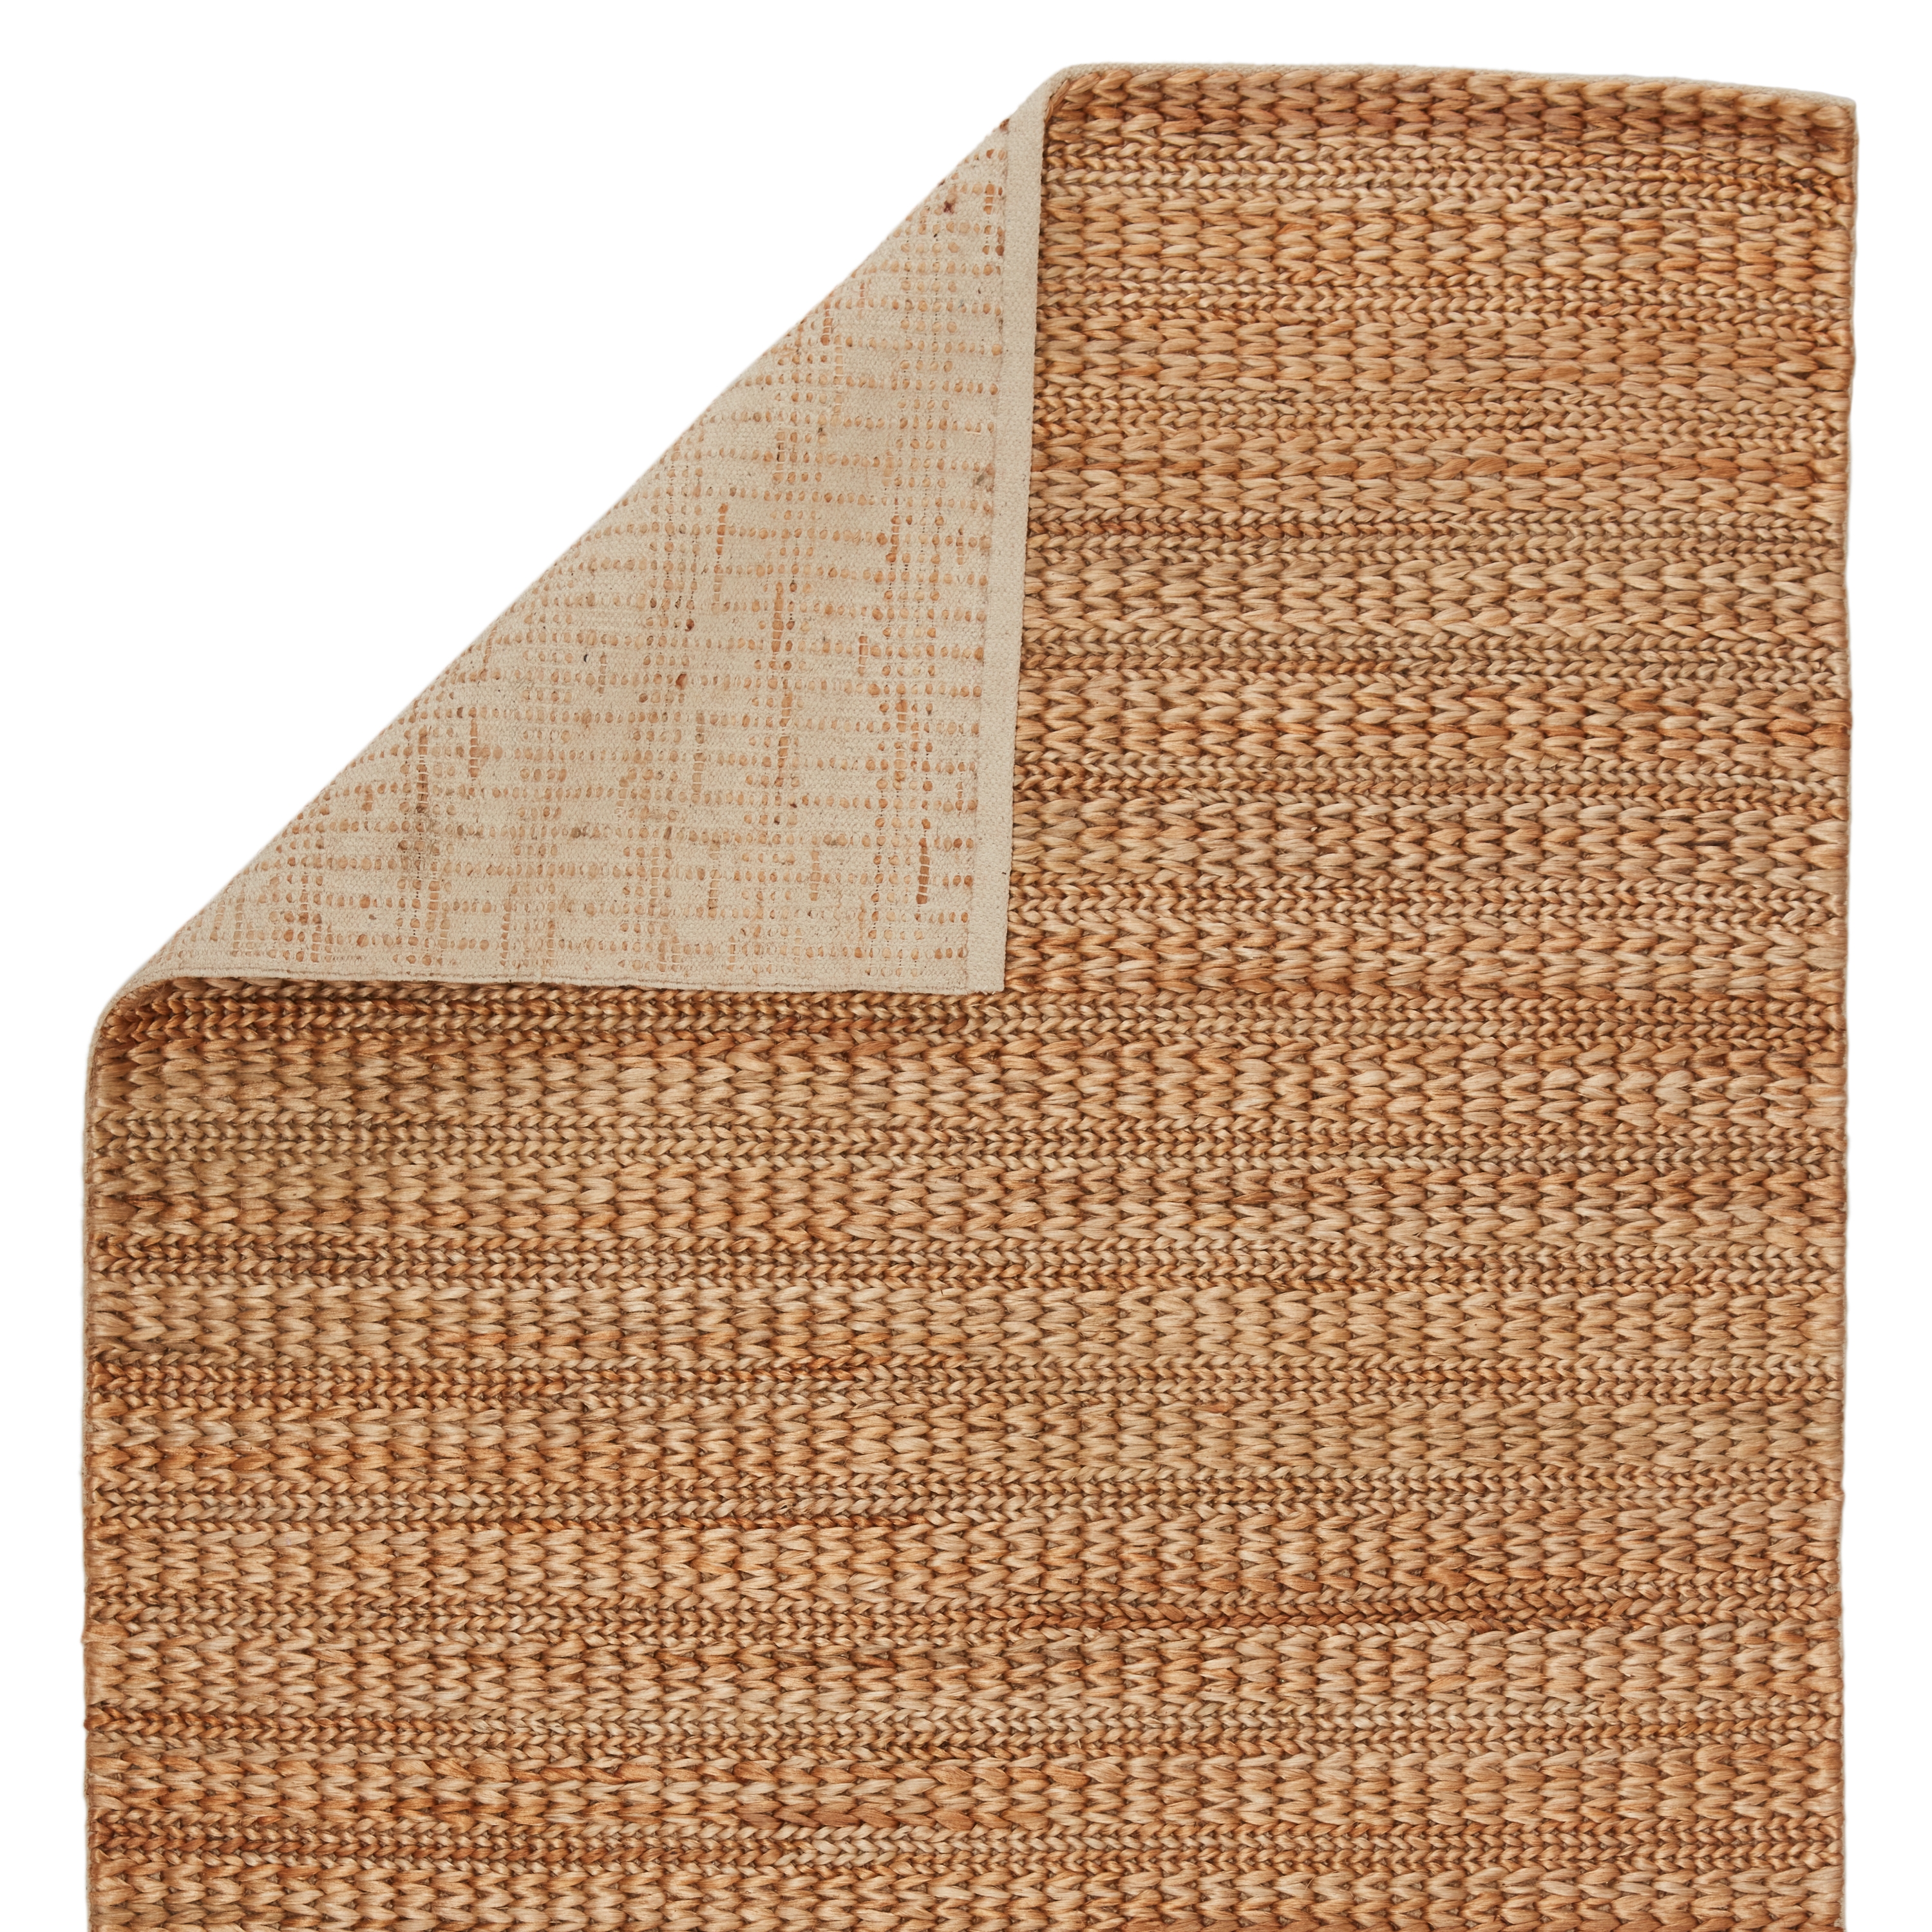 Poncy Natural Solid Tan Area Rug (9'X12') - Image 2